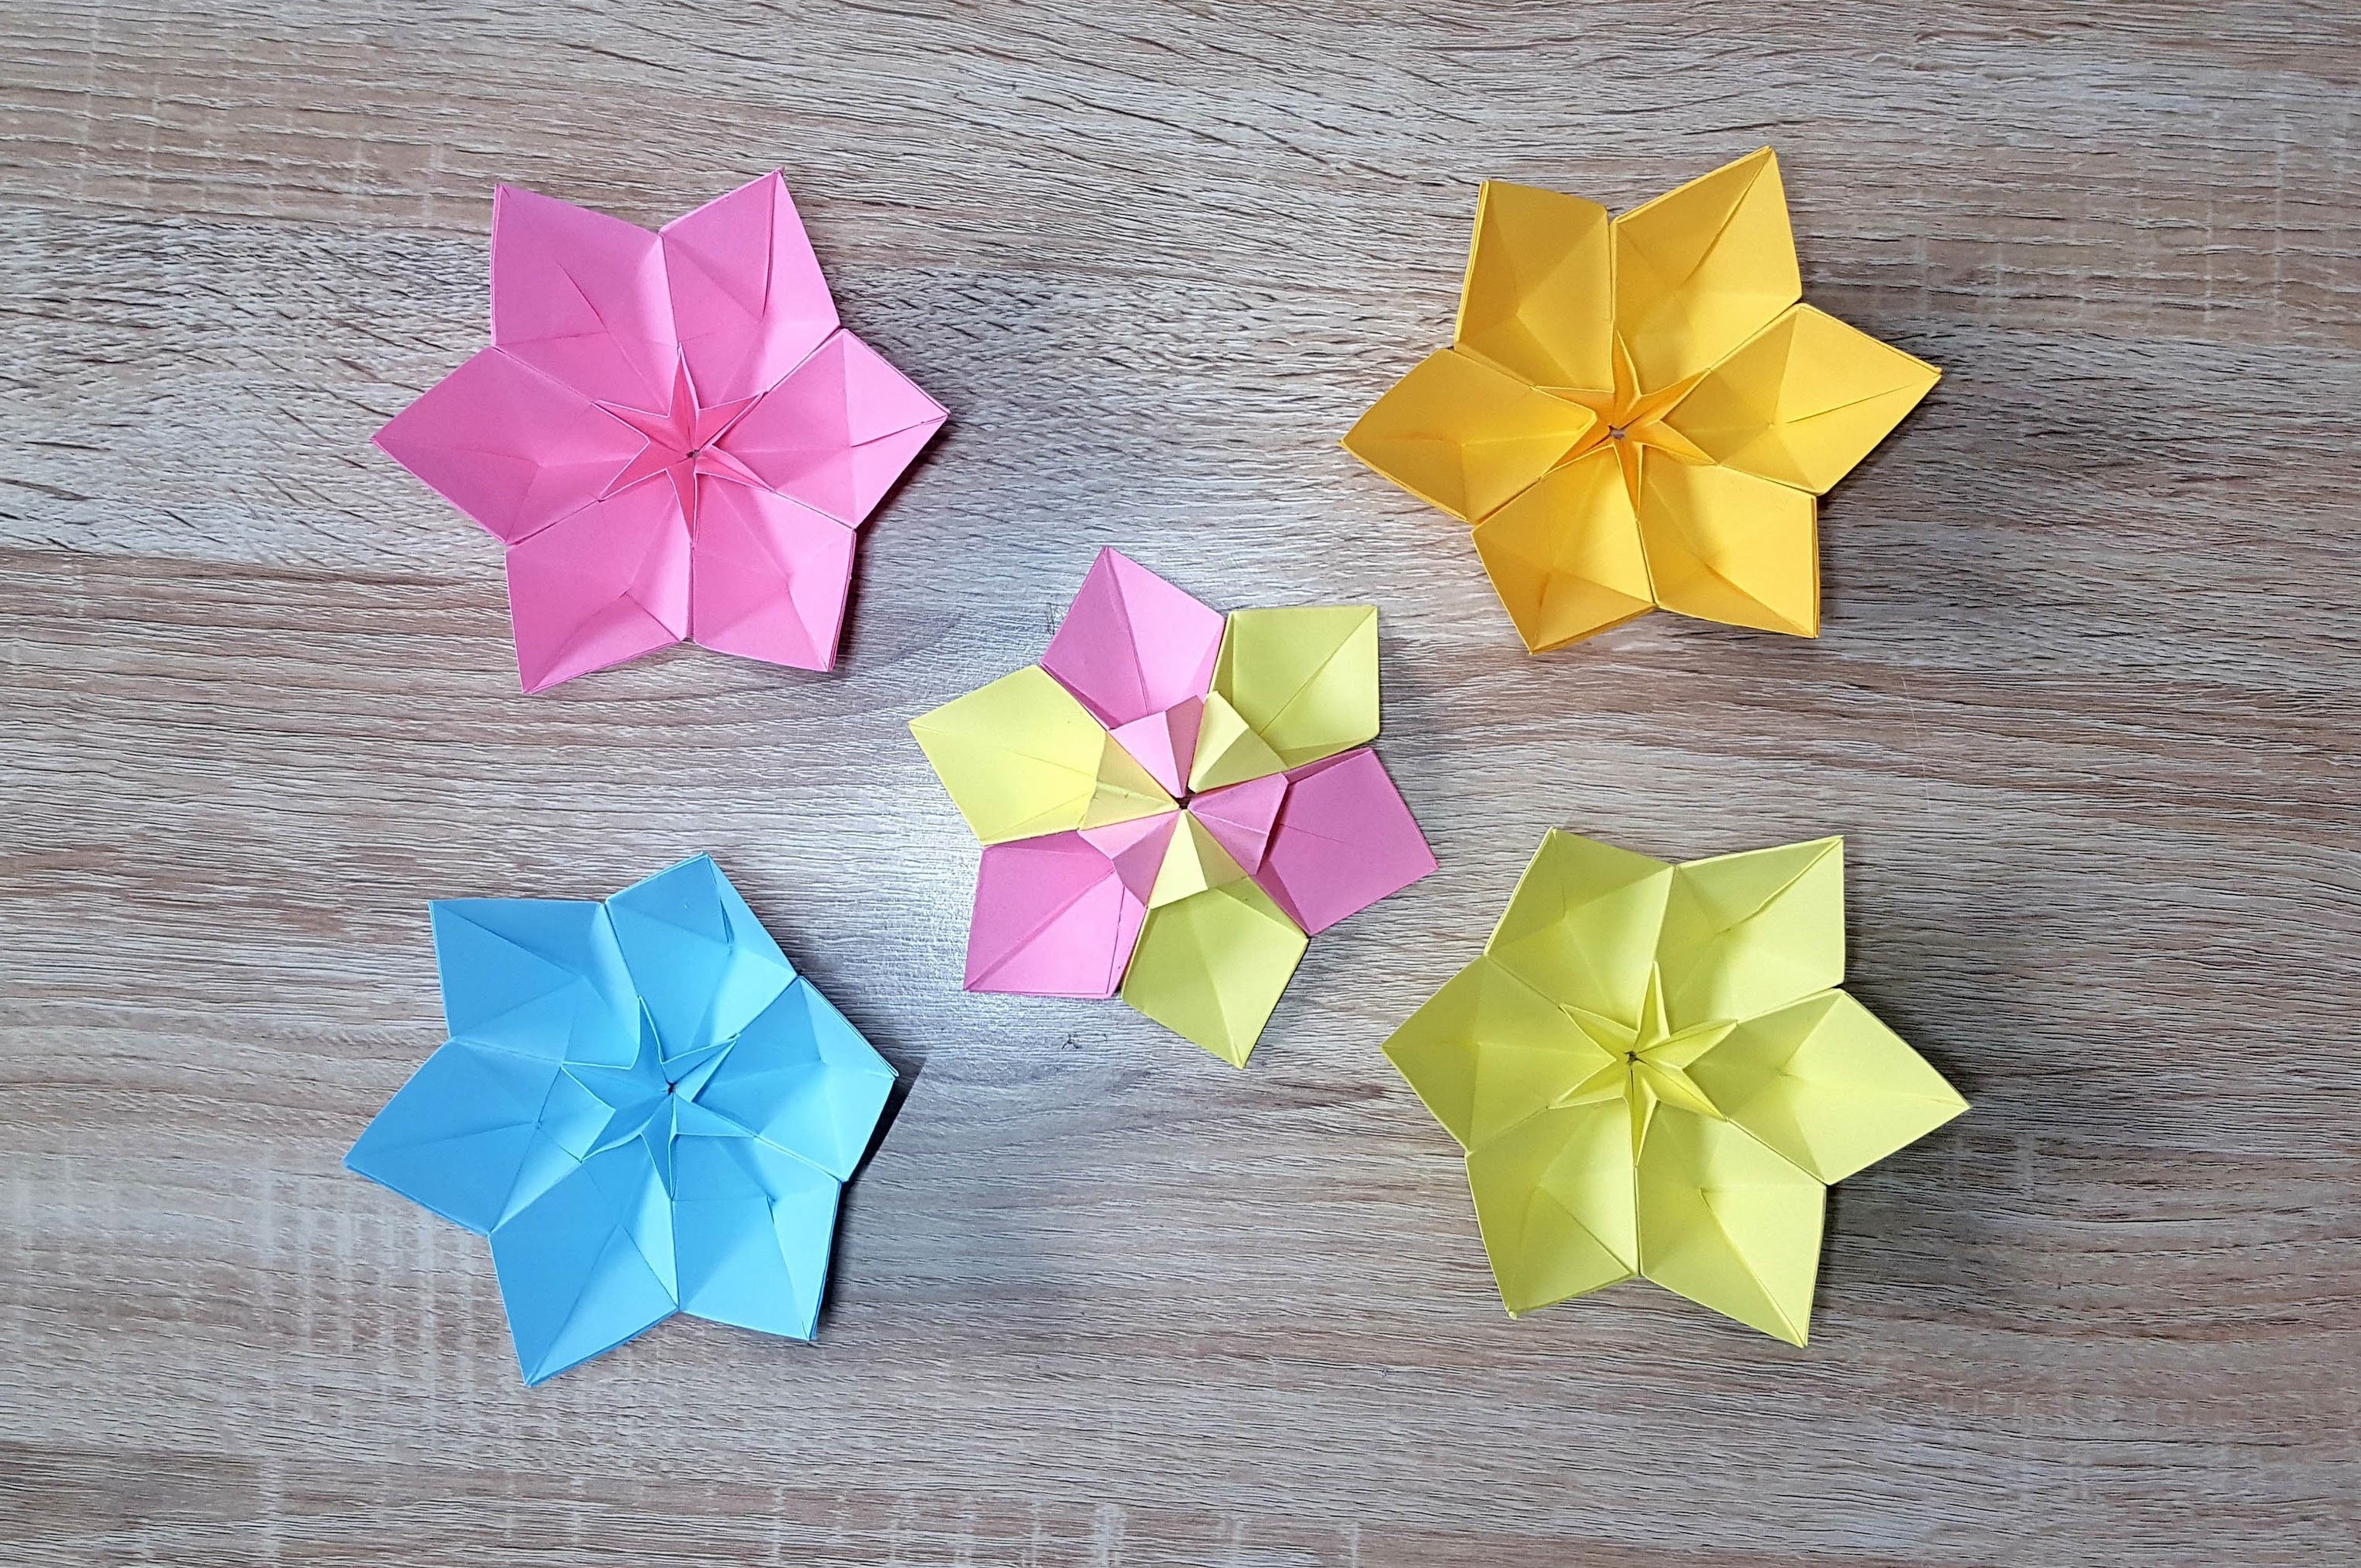 Ellie"s BlumenSpecial- Origami Blume falten (Narzisse). Origami Flower